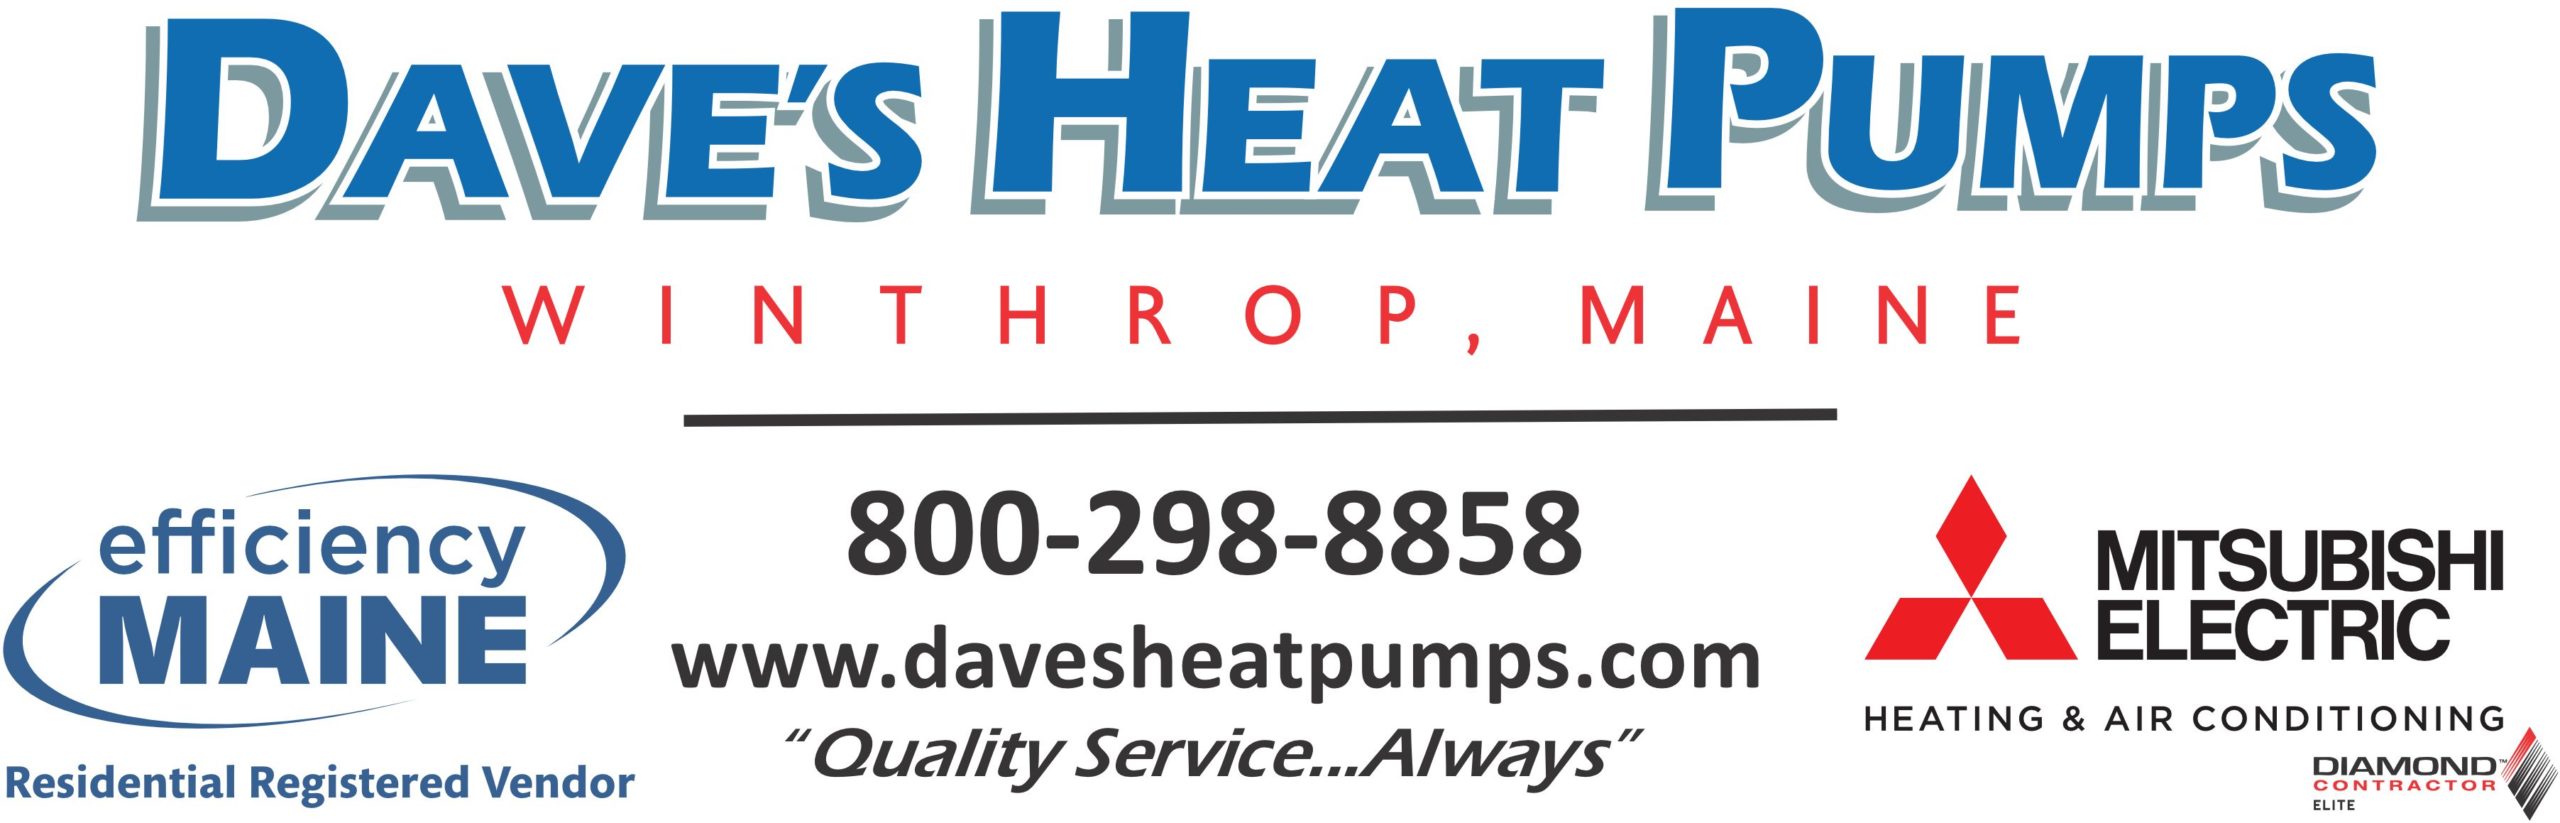 Dave’s Heat Pumps